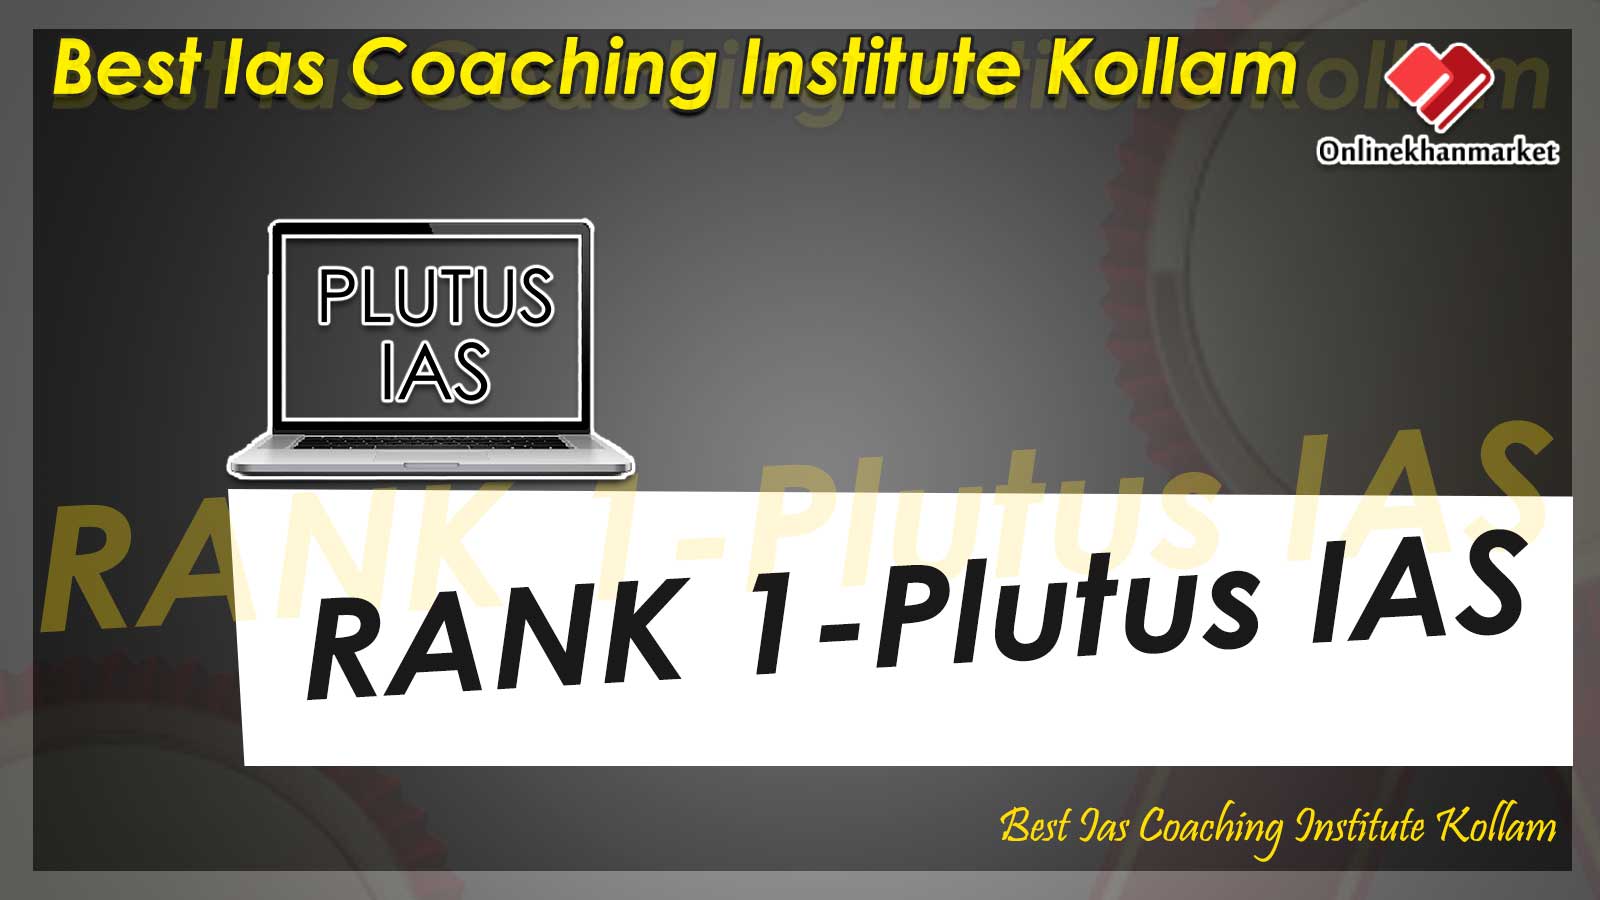 Top IAS Coaching in Kollam